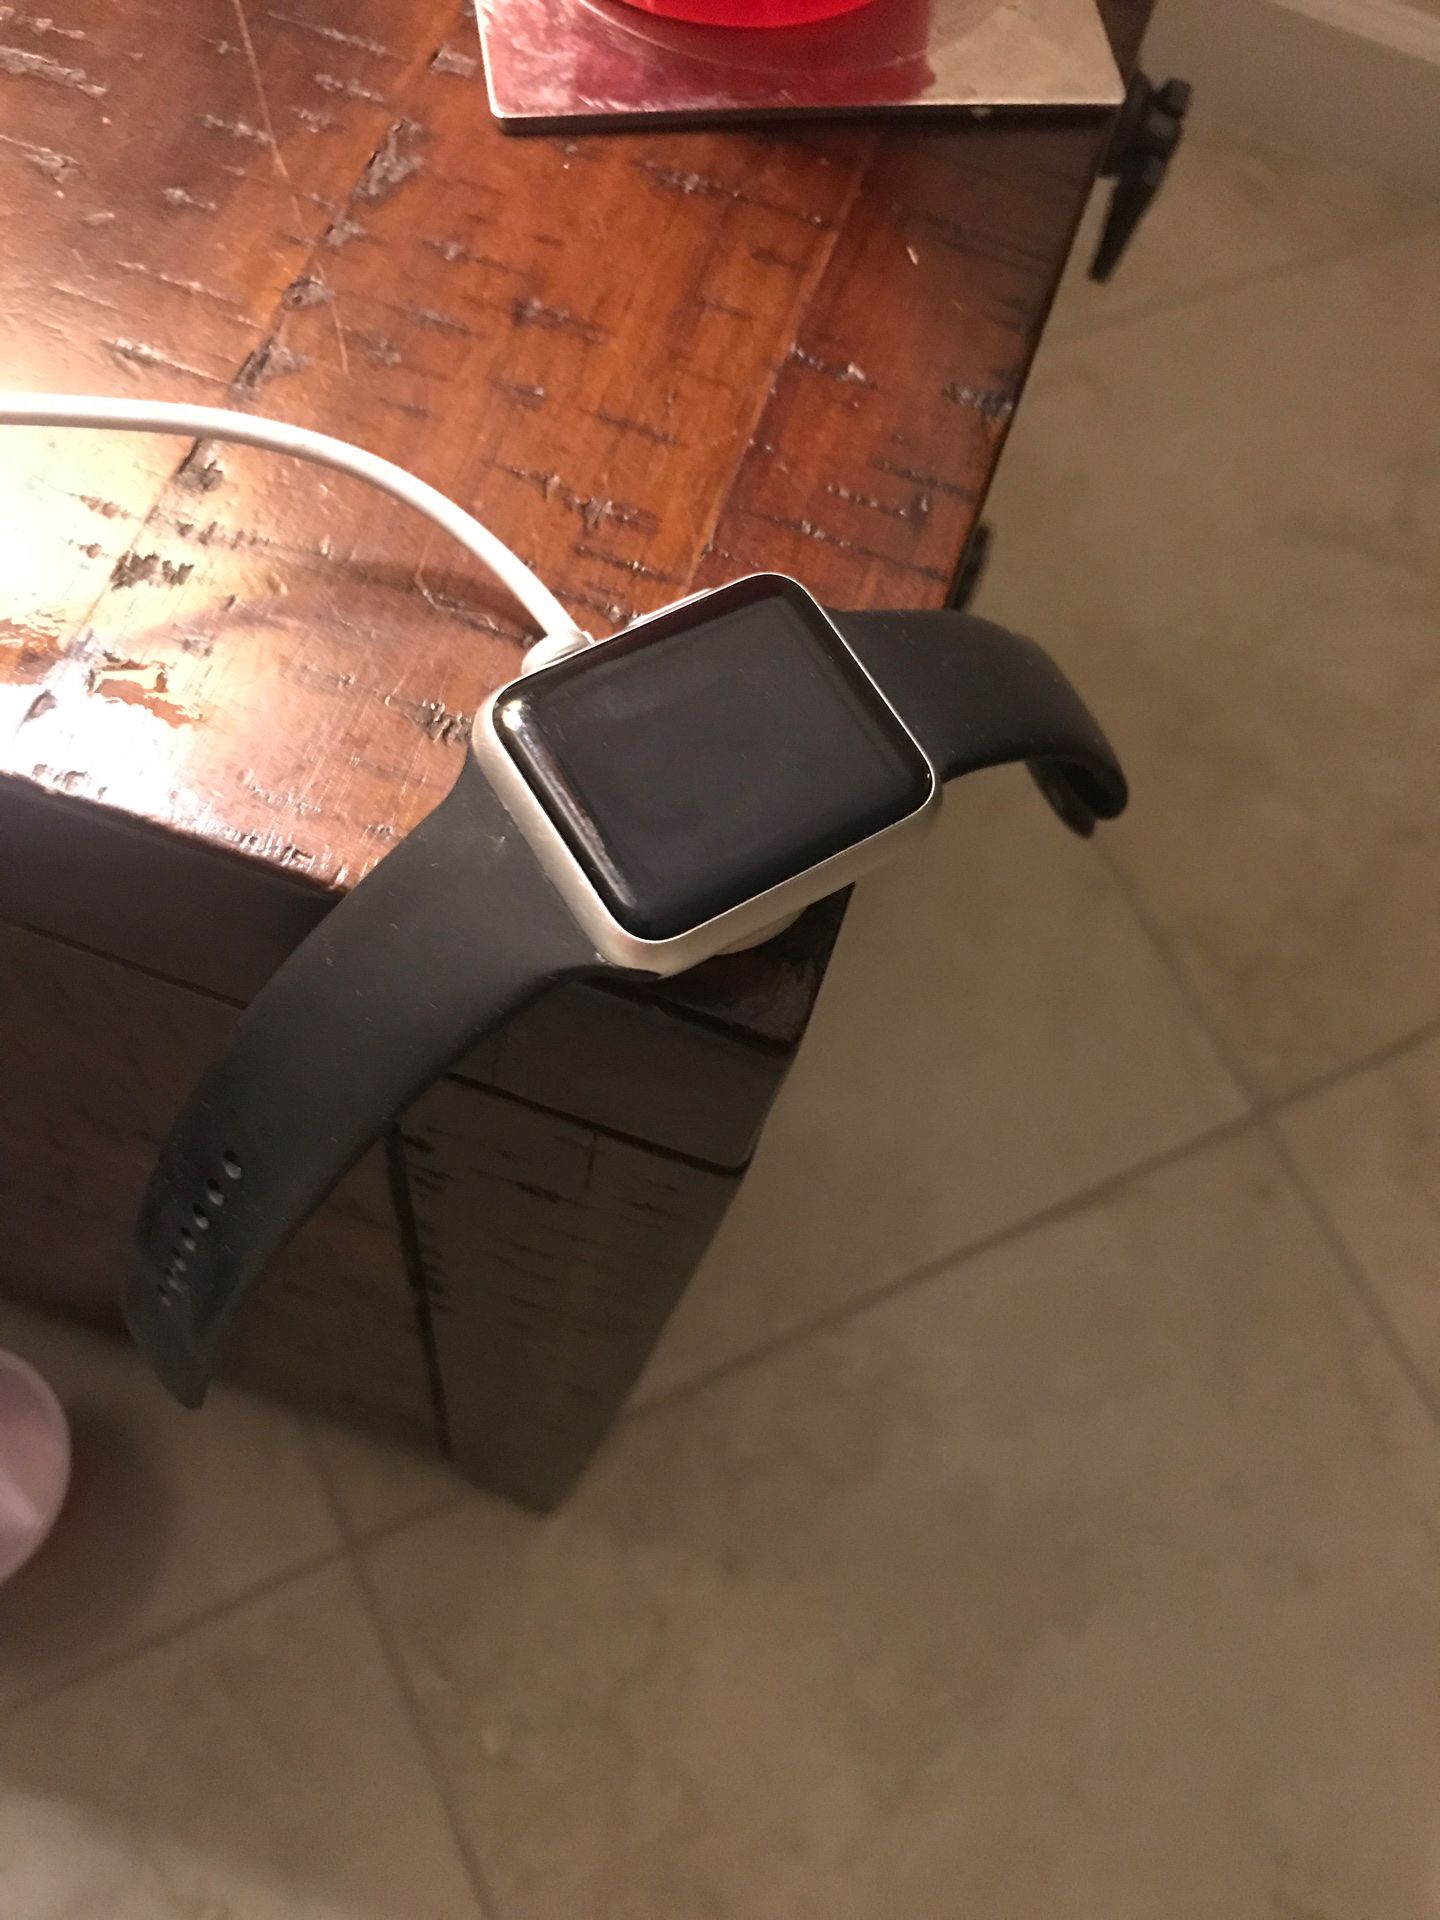 Apple Watch first generation